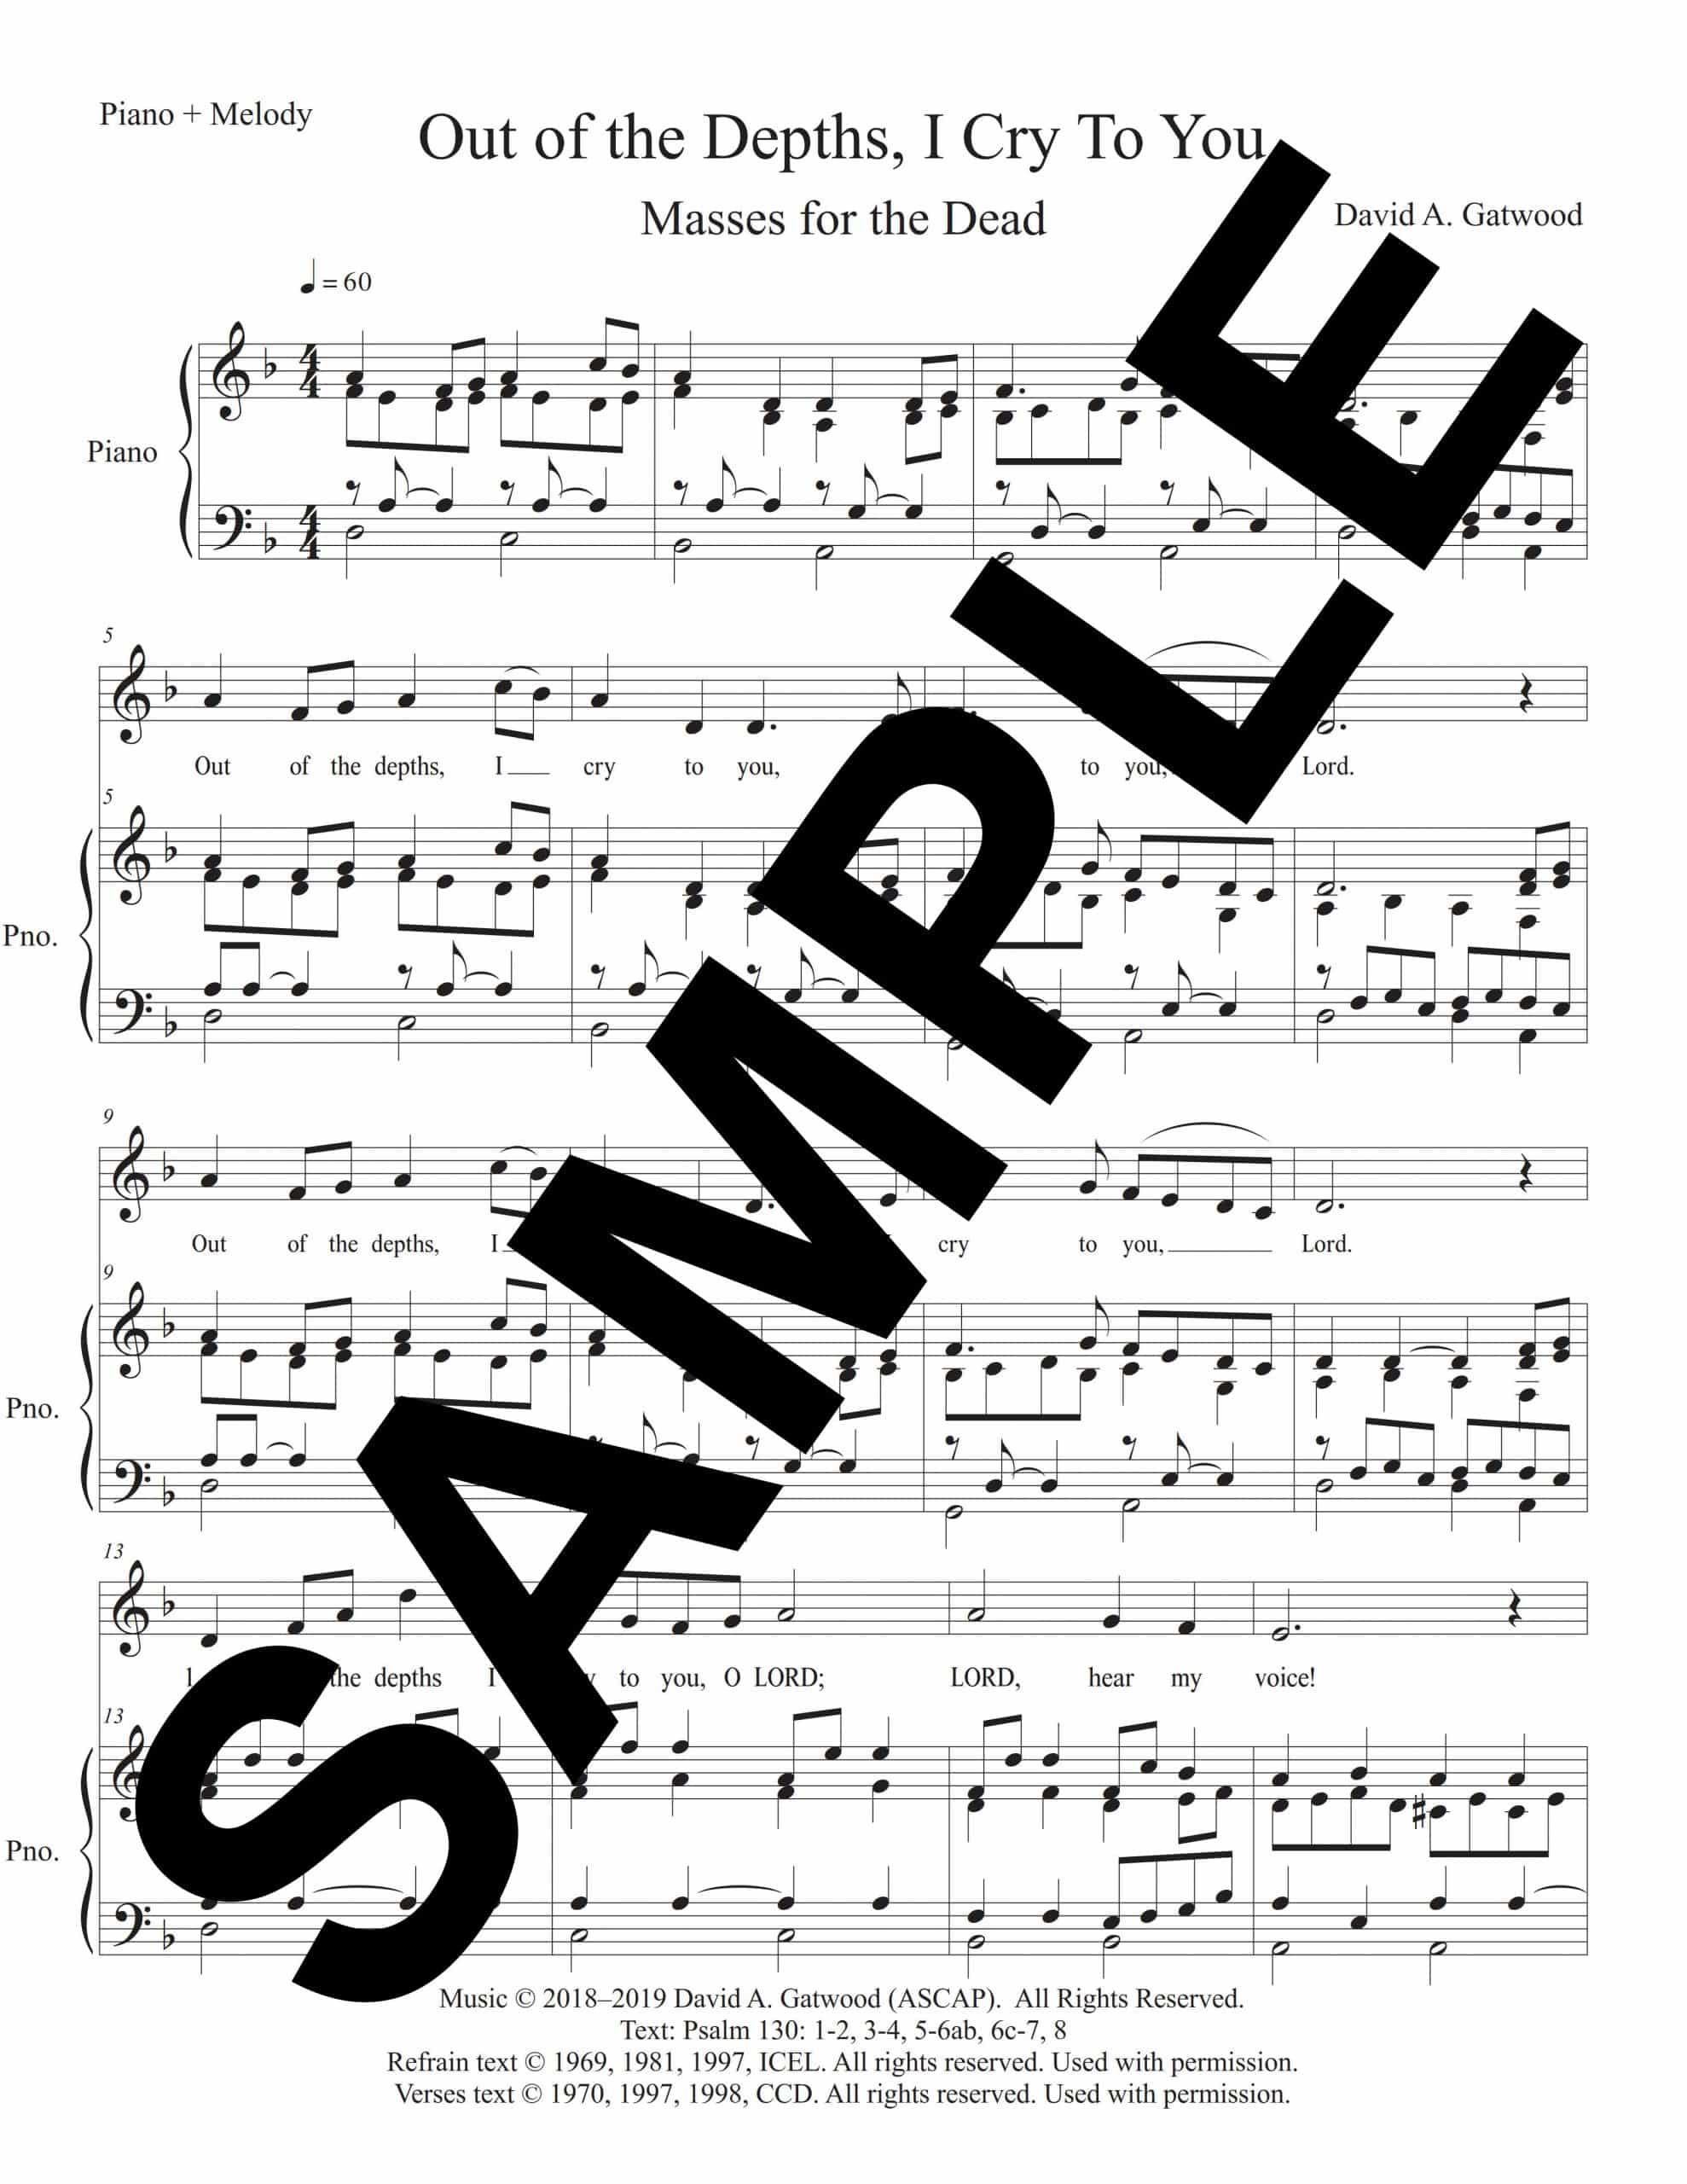 Sheet music for Psalm 130